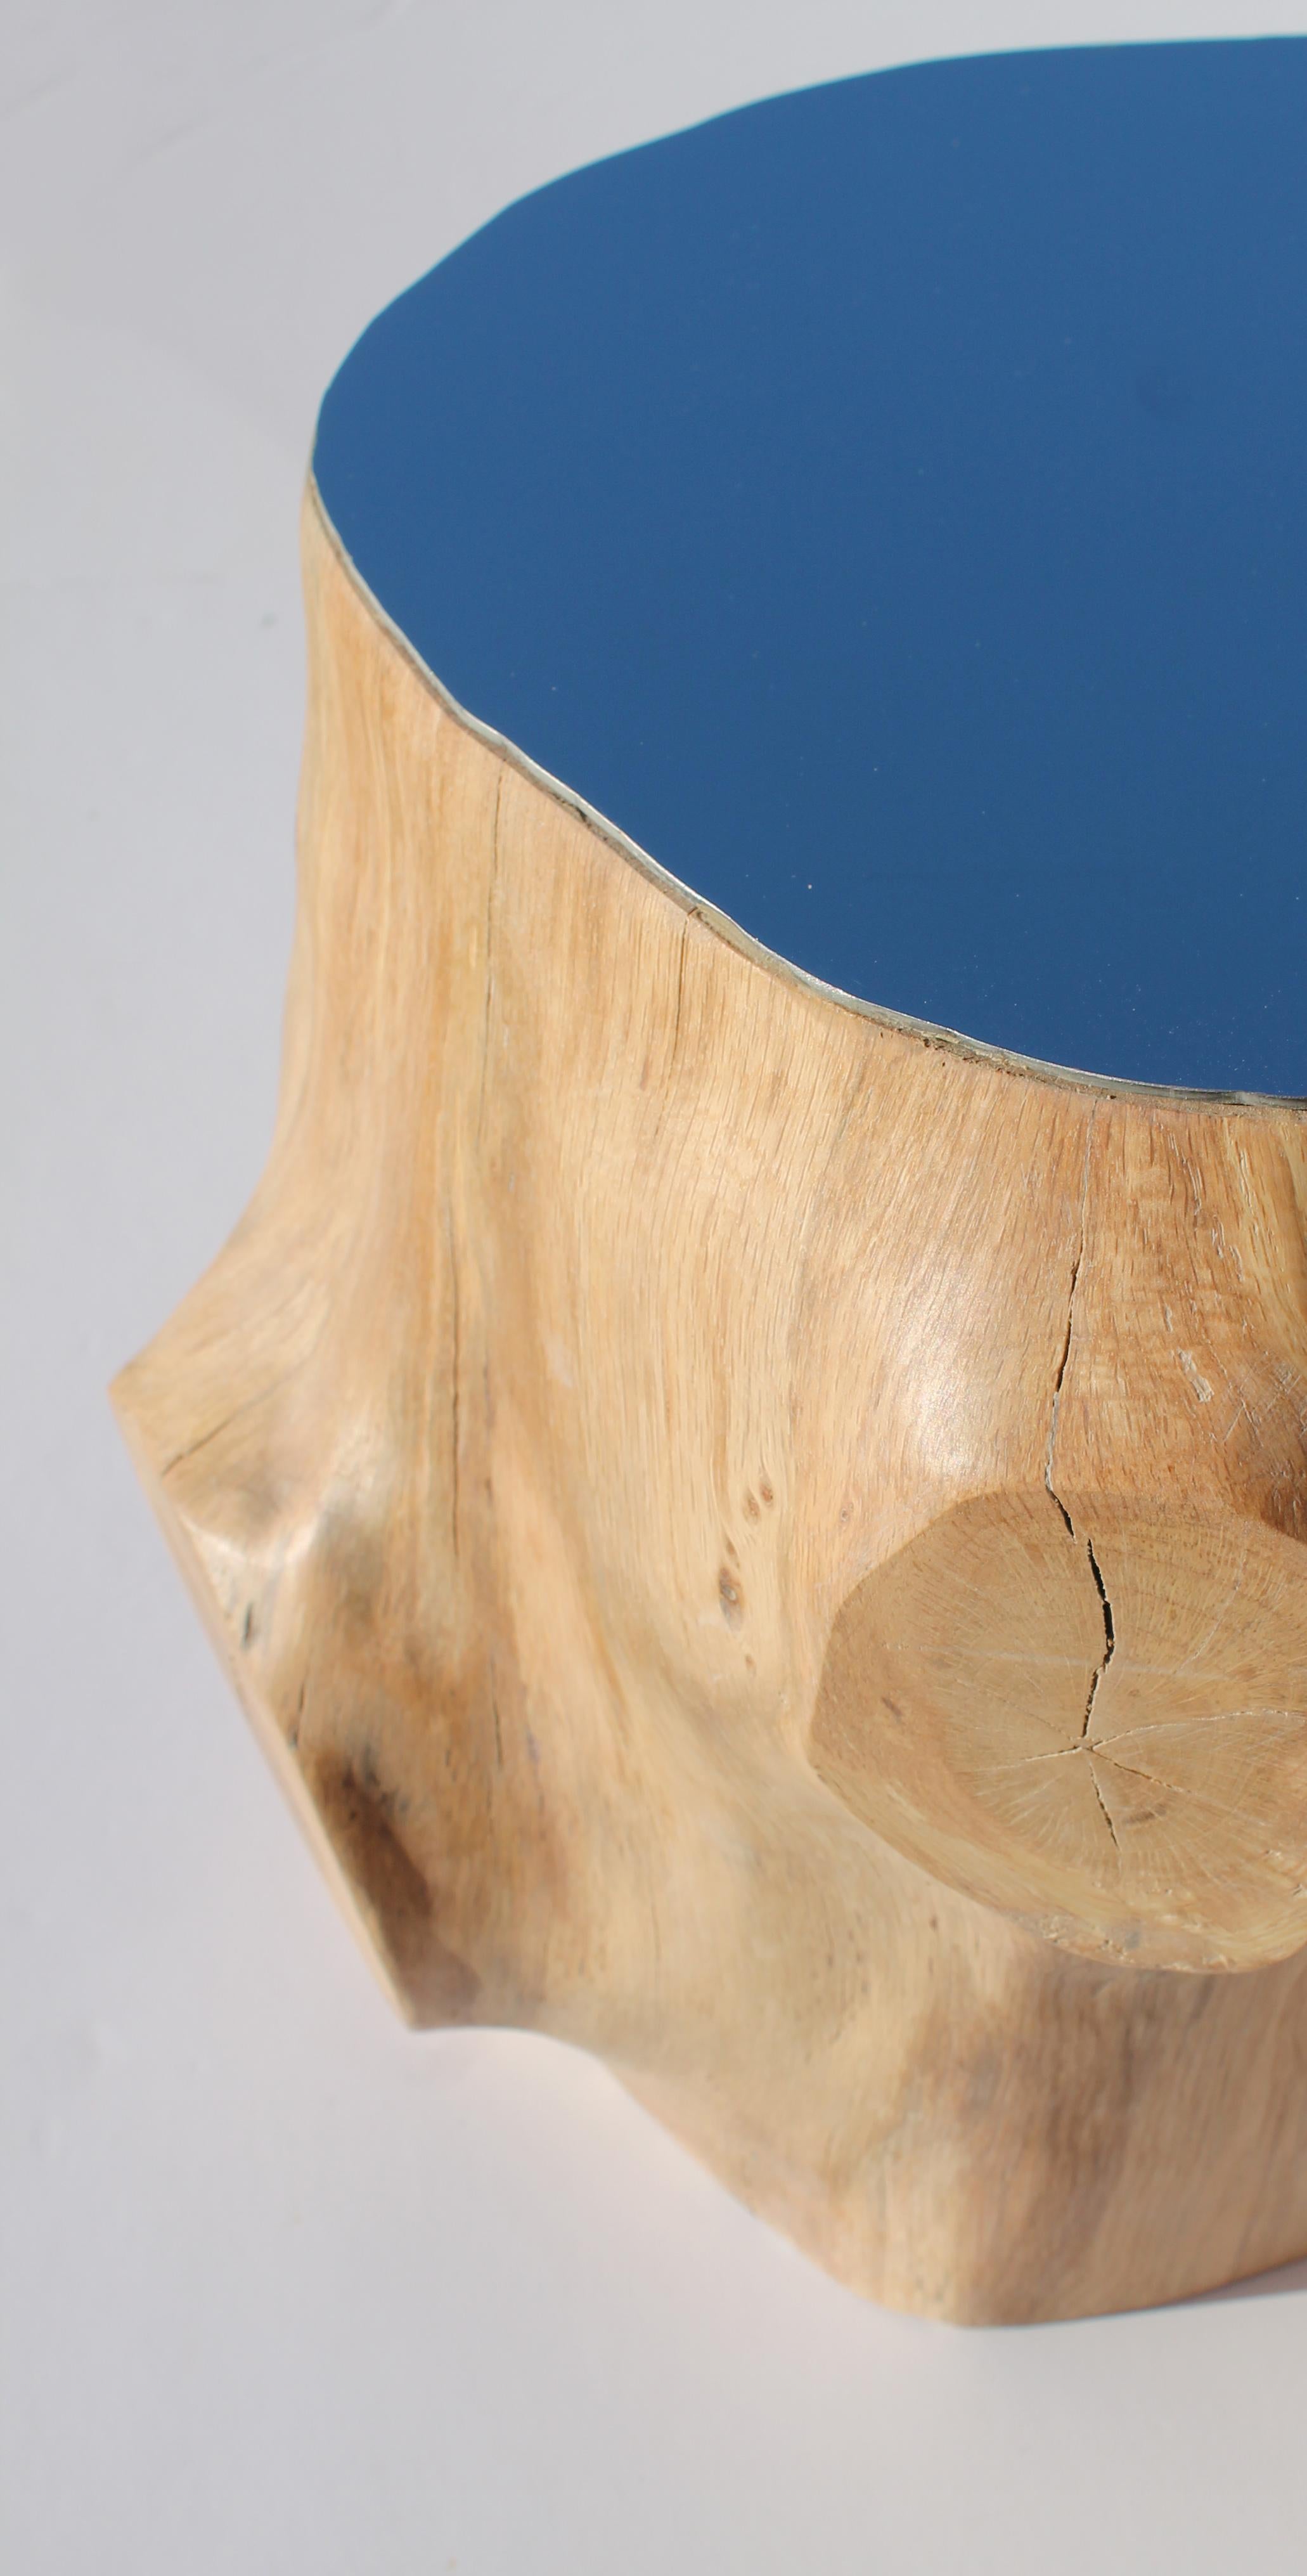 Mirrored Oak Log (9): Sculptural floor installation piece by Lee Borthwick 1